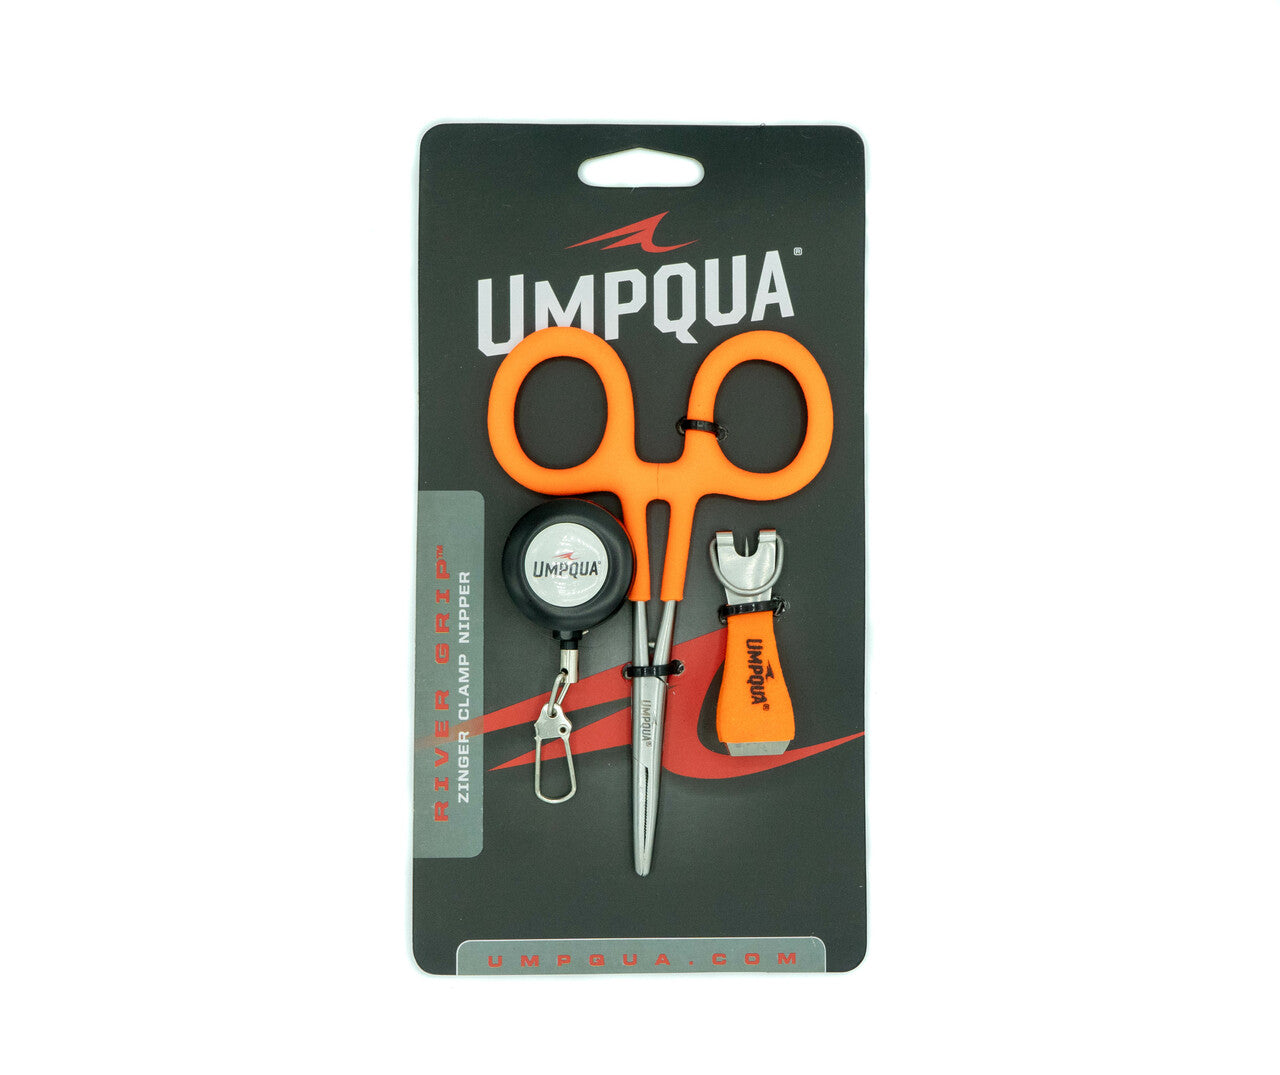 Umpqua River Grip Tool Kit